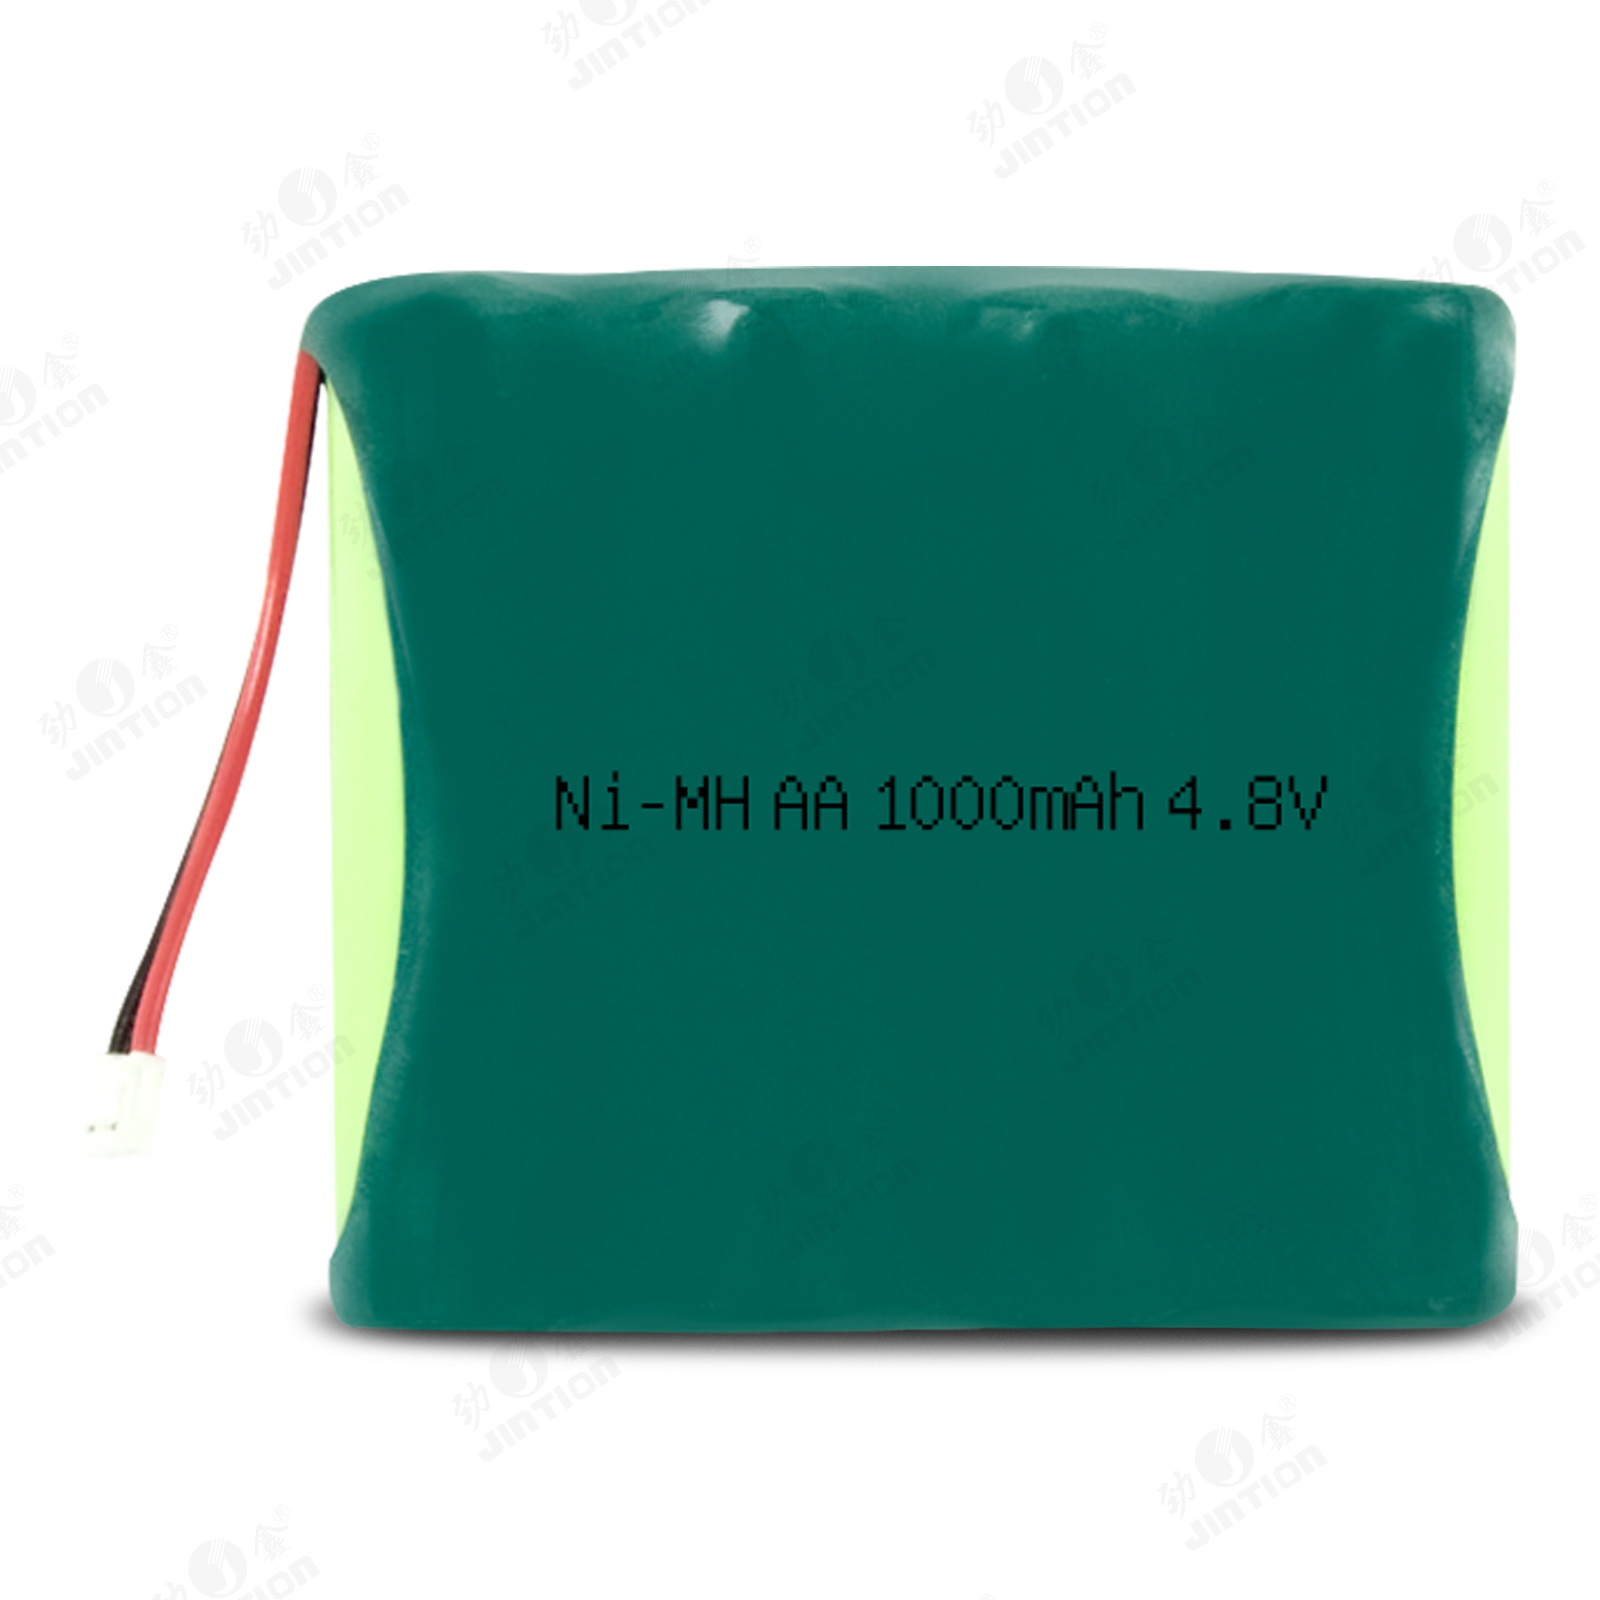 JINTION NIMH AA 1000MAH 4.8V nimh rechargeable battery for Hoist custom battery